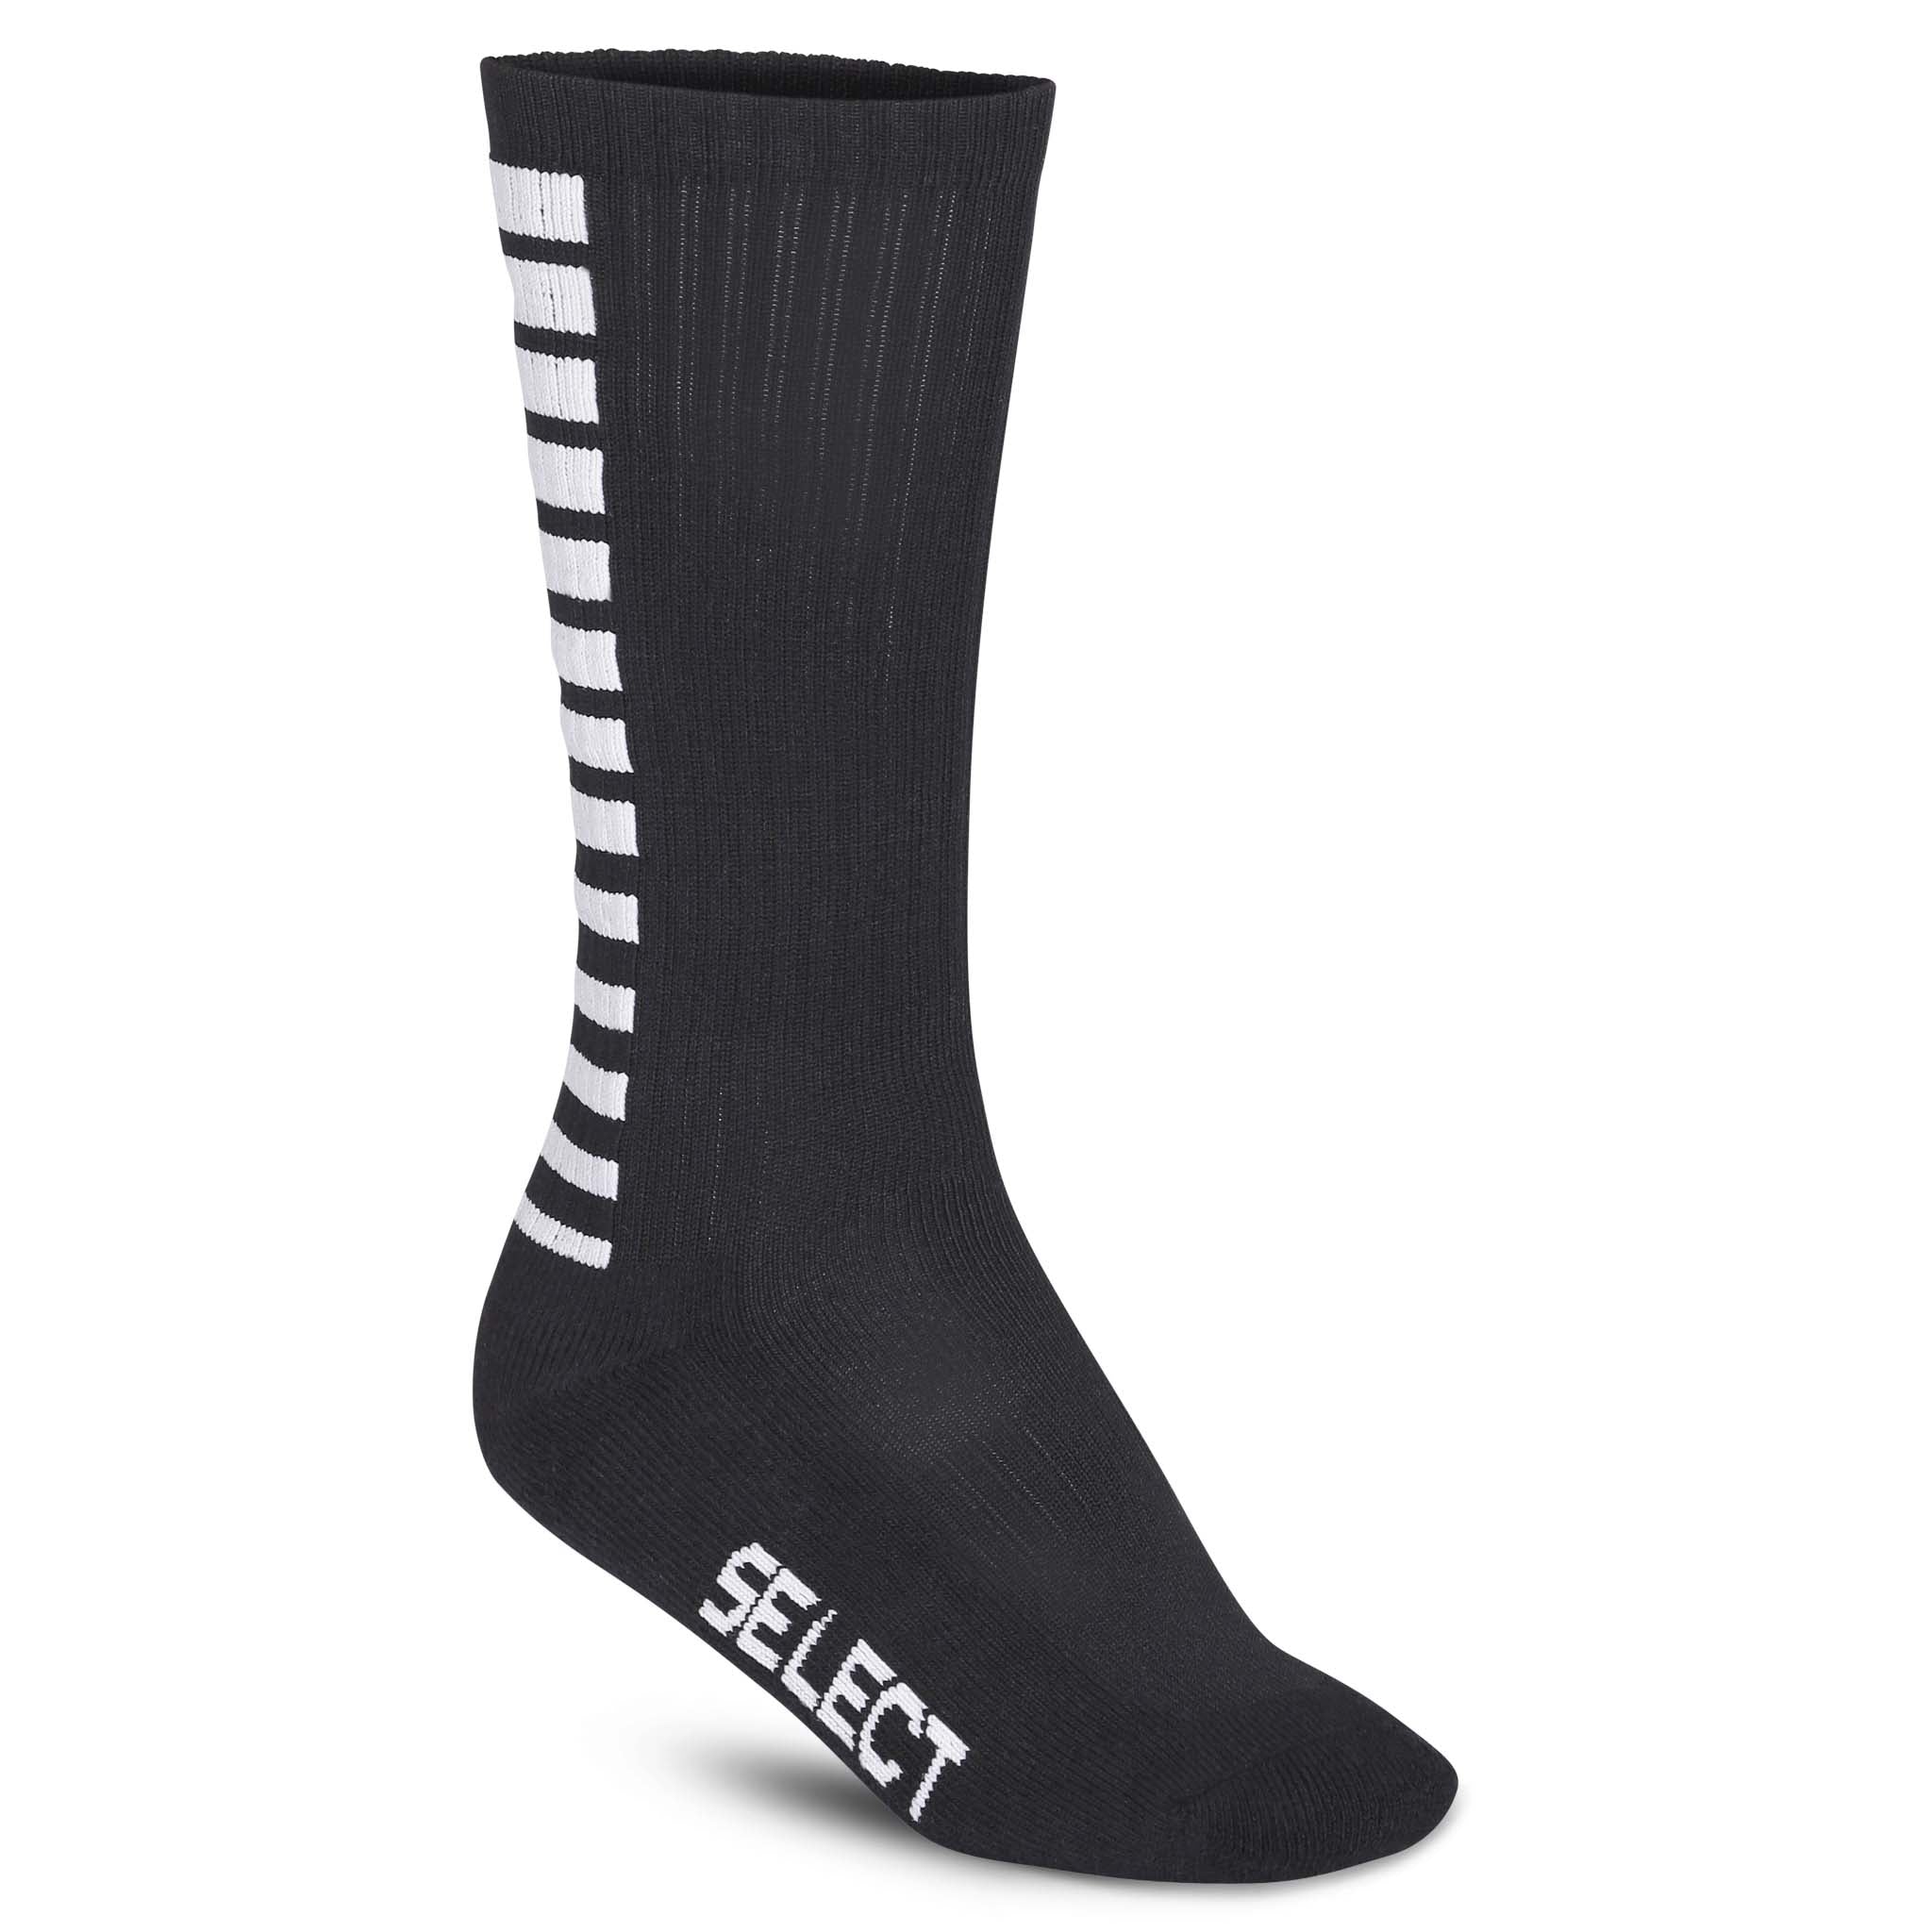 Striped sports socks - long